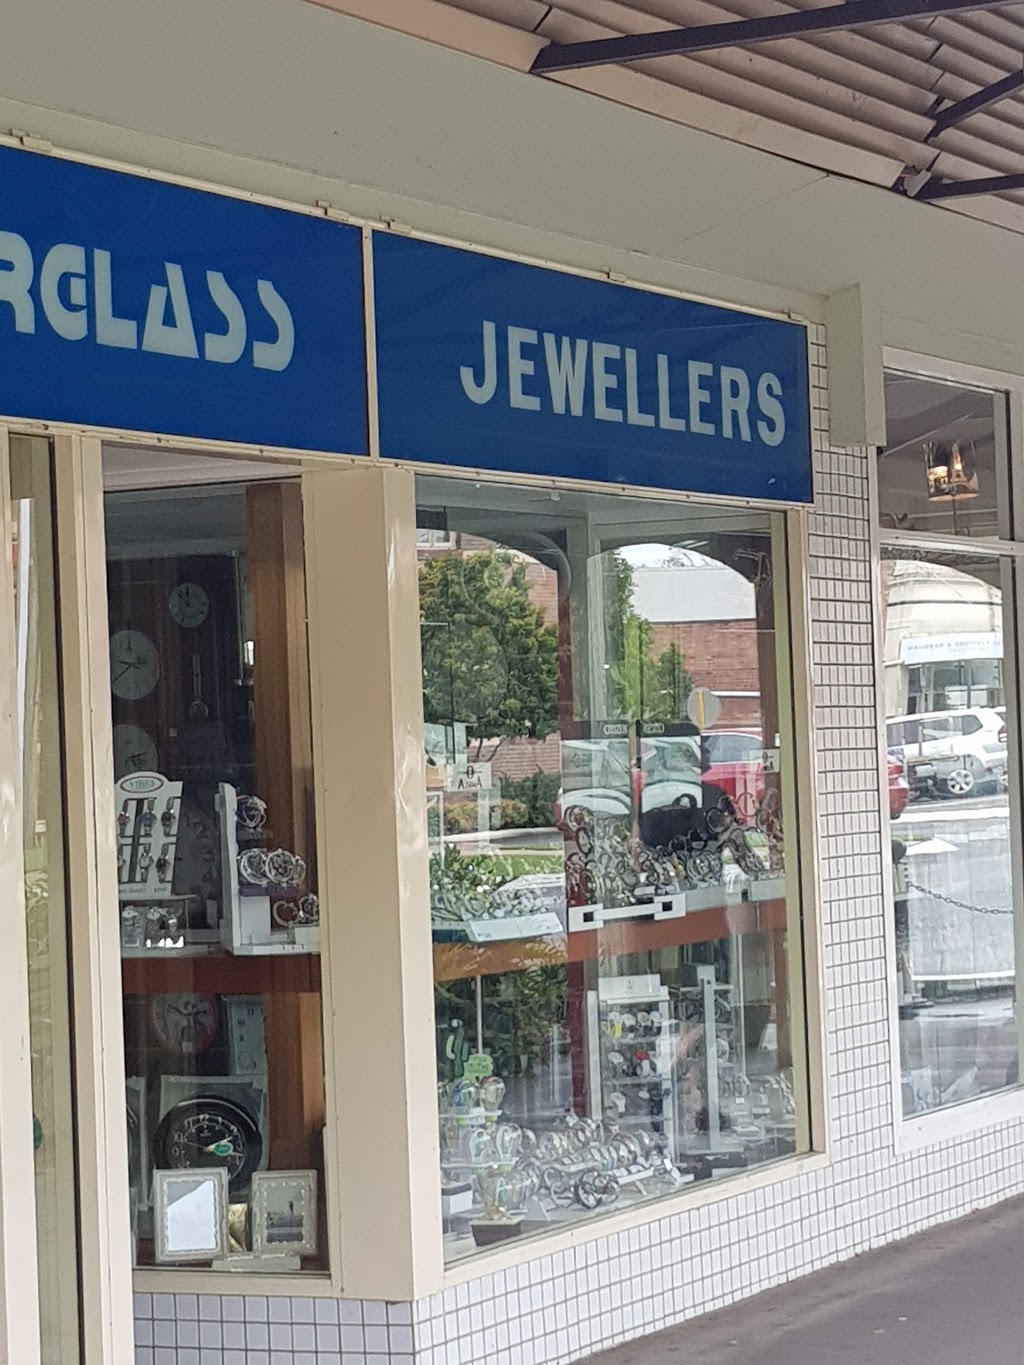 Pinkertons Hourglass Jewellers | jewelry store | 126 Barker St, Casino NSW 2470, Australia | 0266621172 OR +61 2 6662 1172